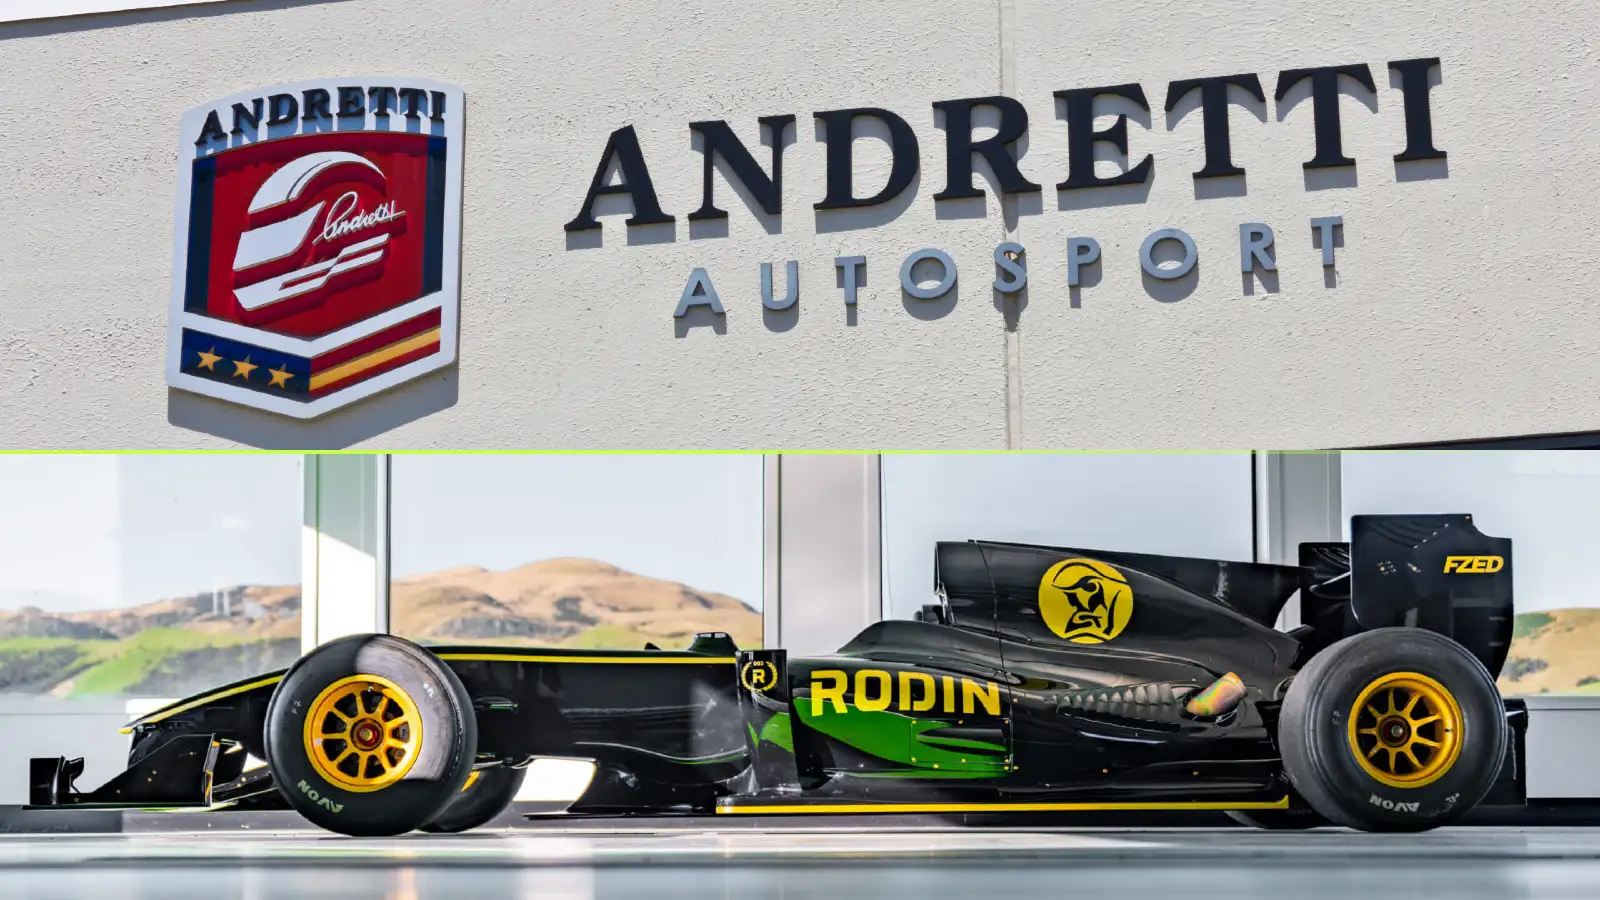 Andretti Autosport's logo, Rodin reveal FZED car.